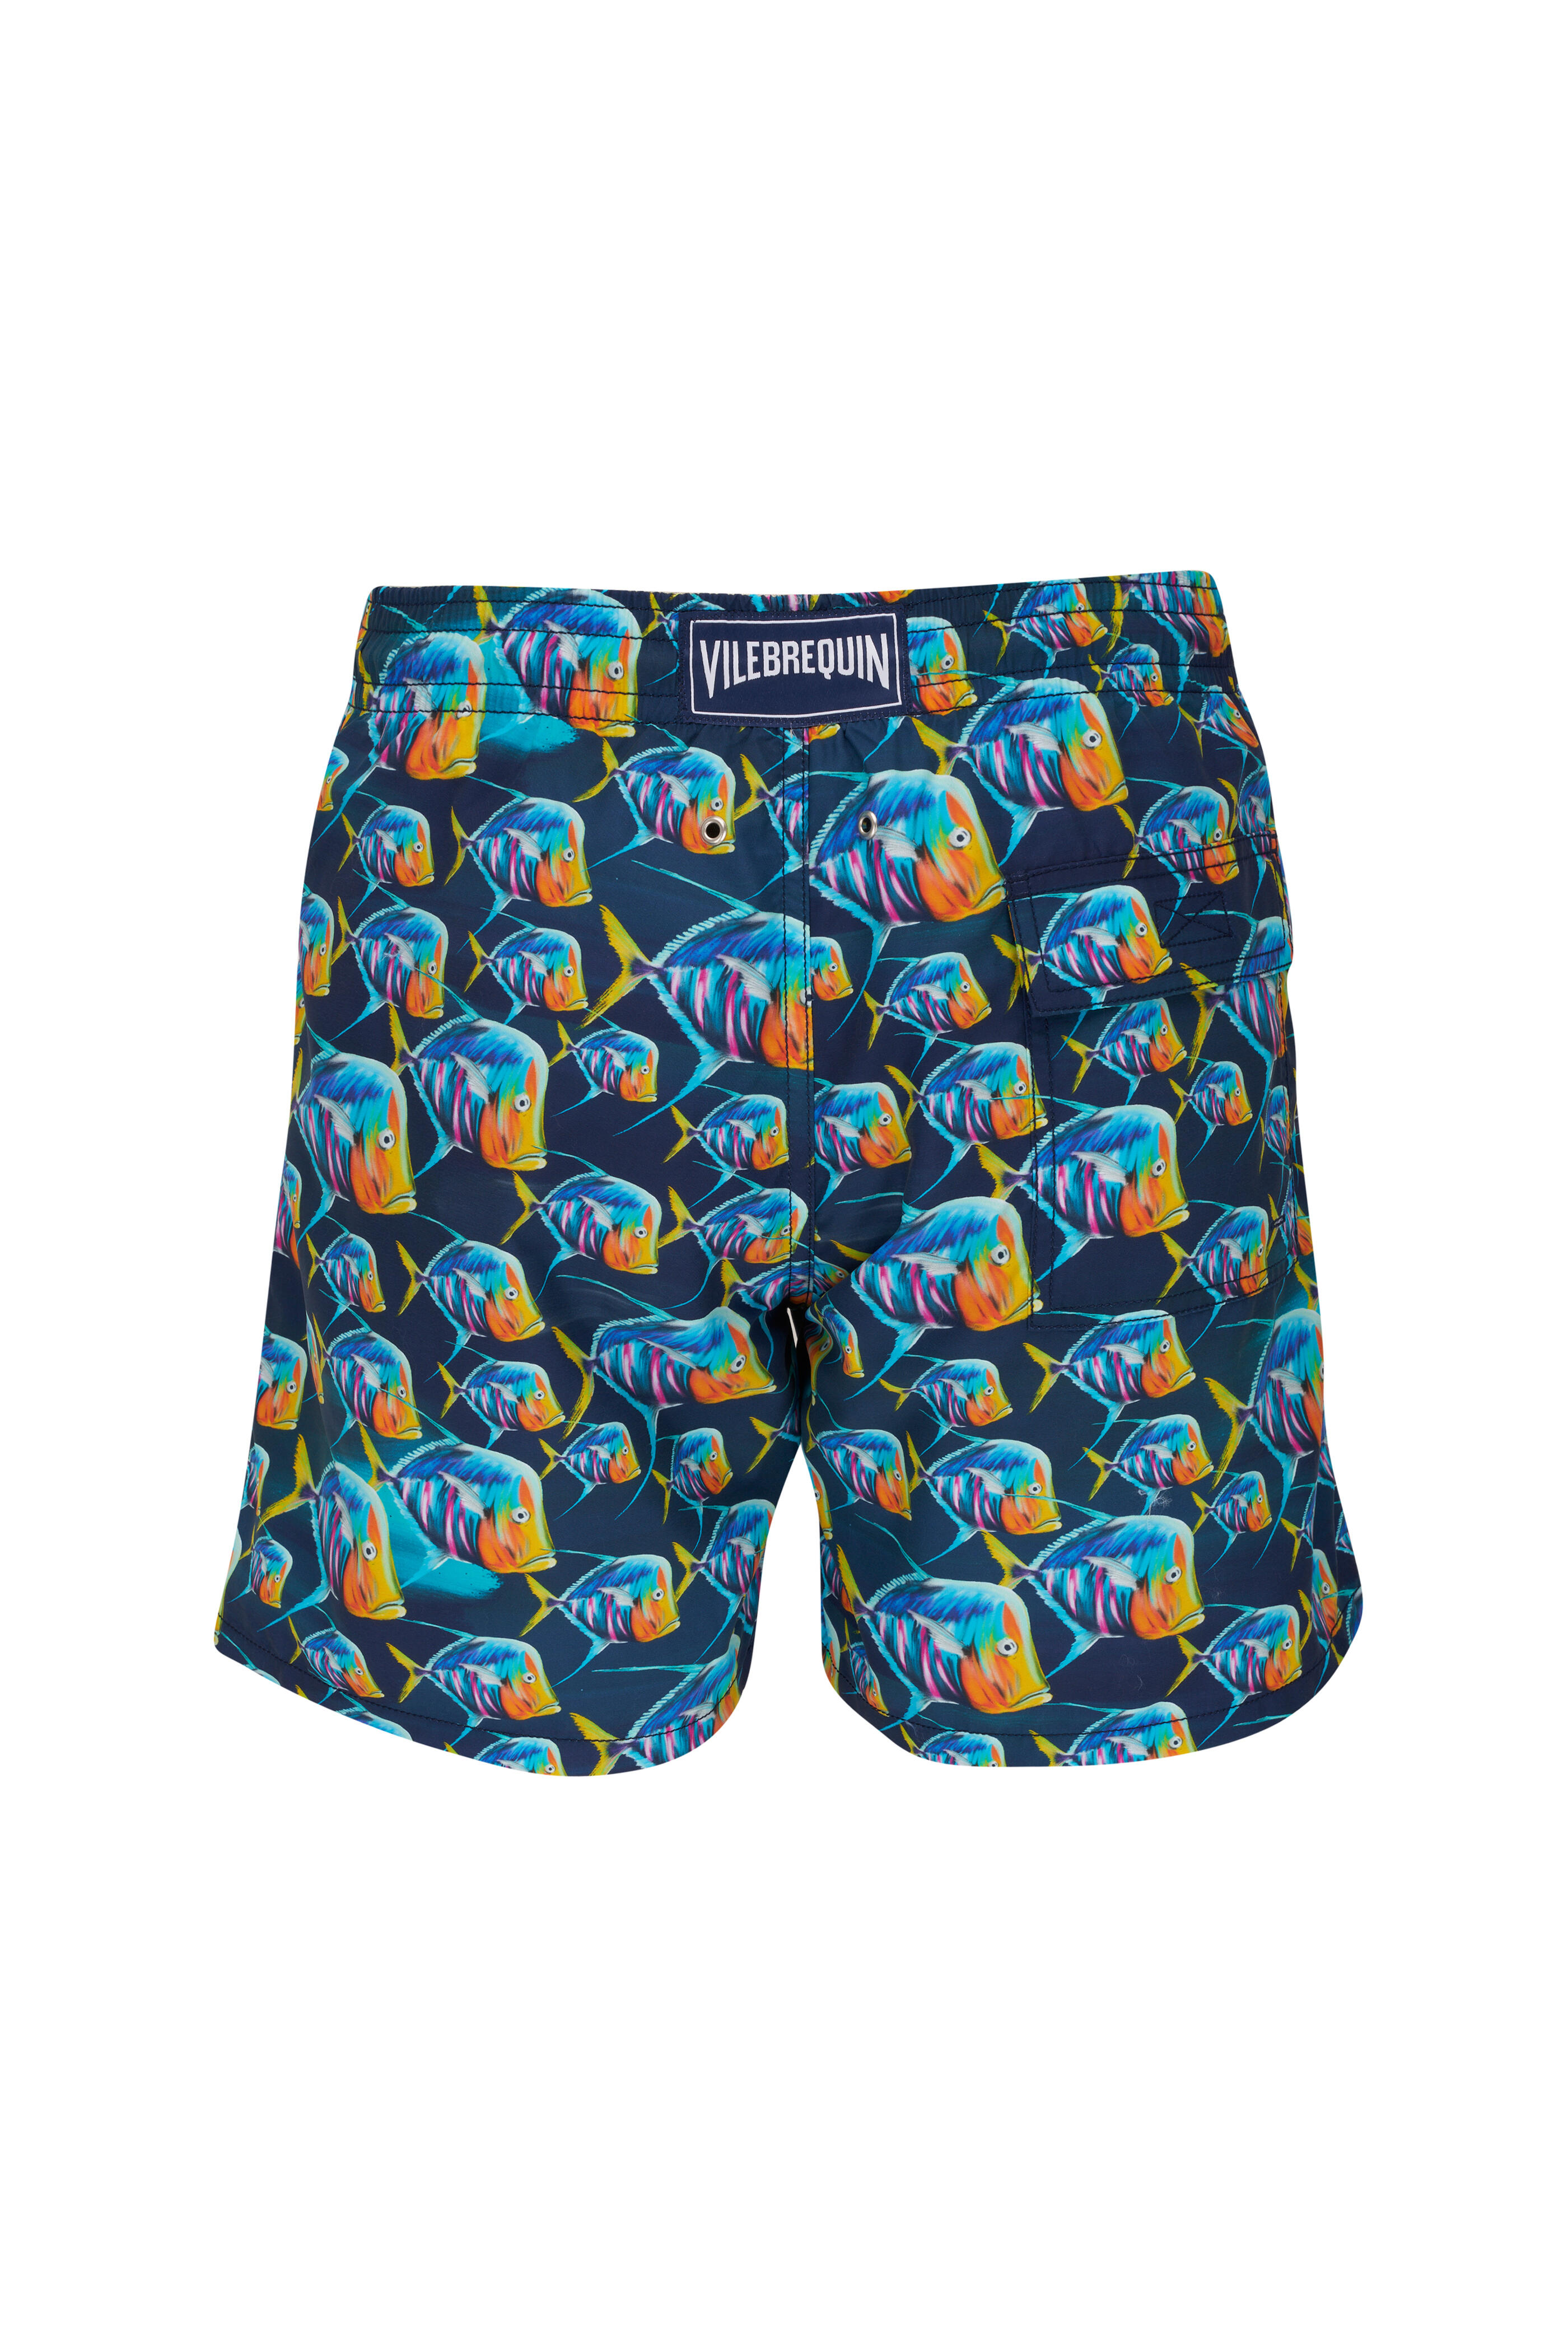 Vilebrequin - Blue Piranhas Print Swim Trunks | Mitchell Stores